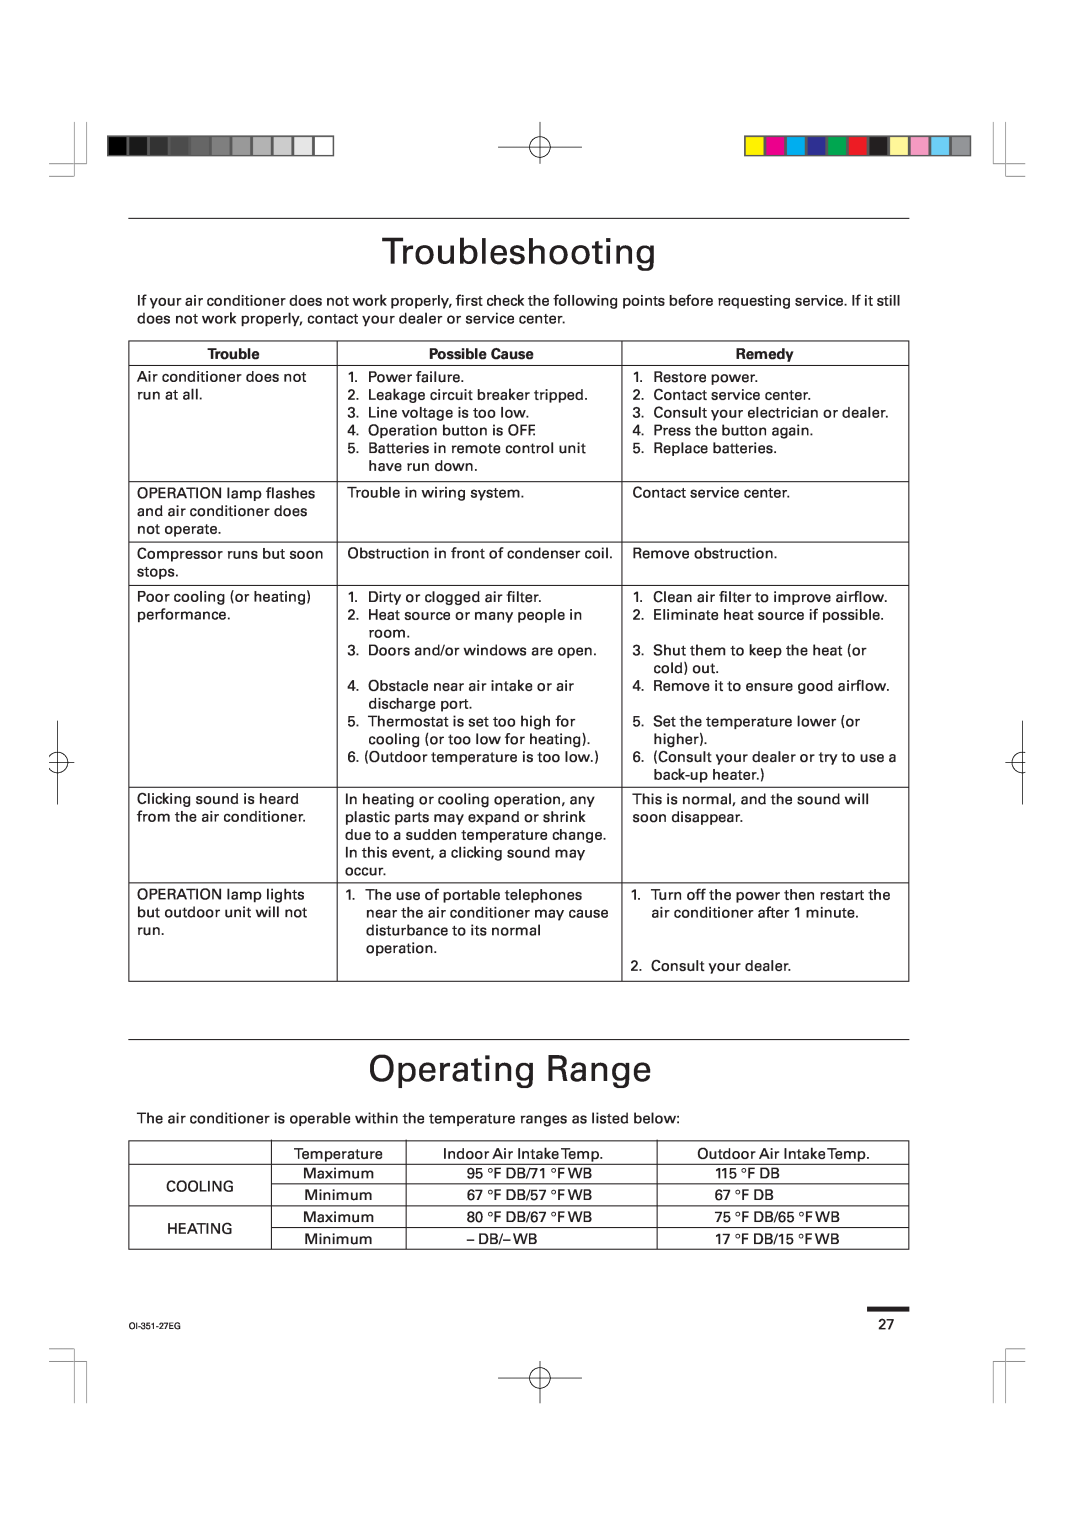 Sanyo KHS1852, KHS0951, KHS1251 instruction manual Troubleshooting, Operating Range, Possible Cause, Remedy 